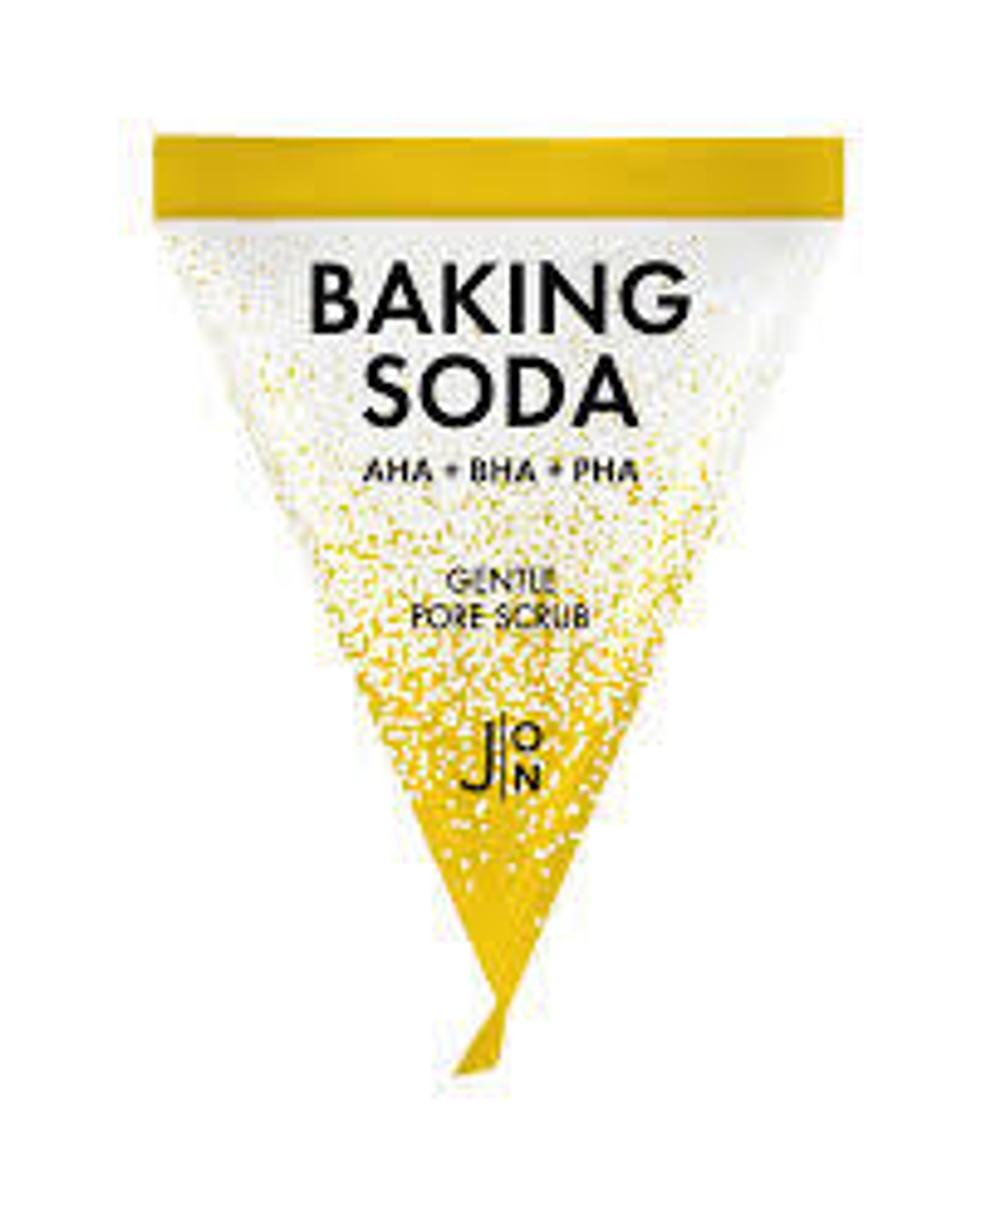 J:ON BAKING SODA Скраб для лица СОДОВЫЙ Baking Soda Gentle Pore Scrub, 5гр